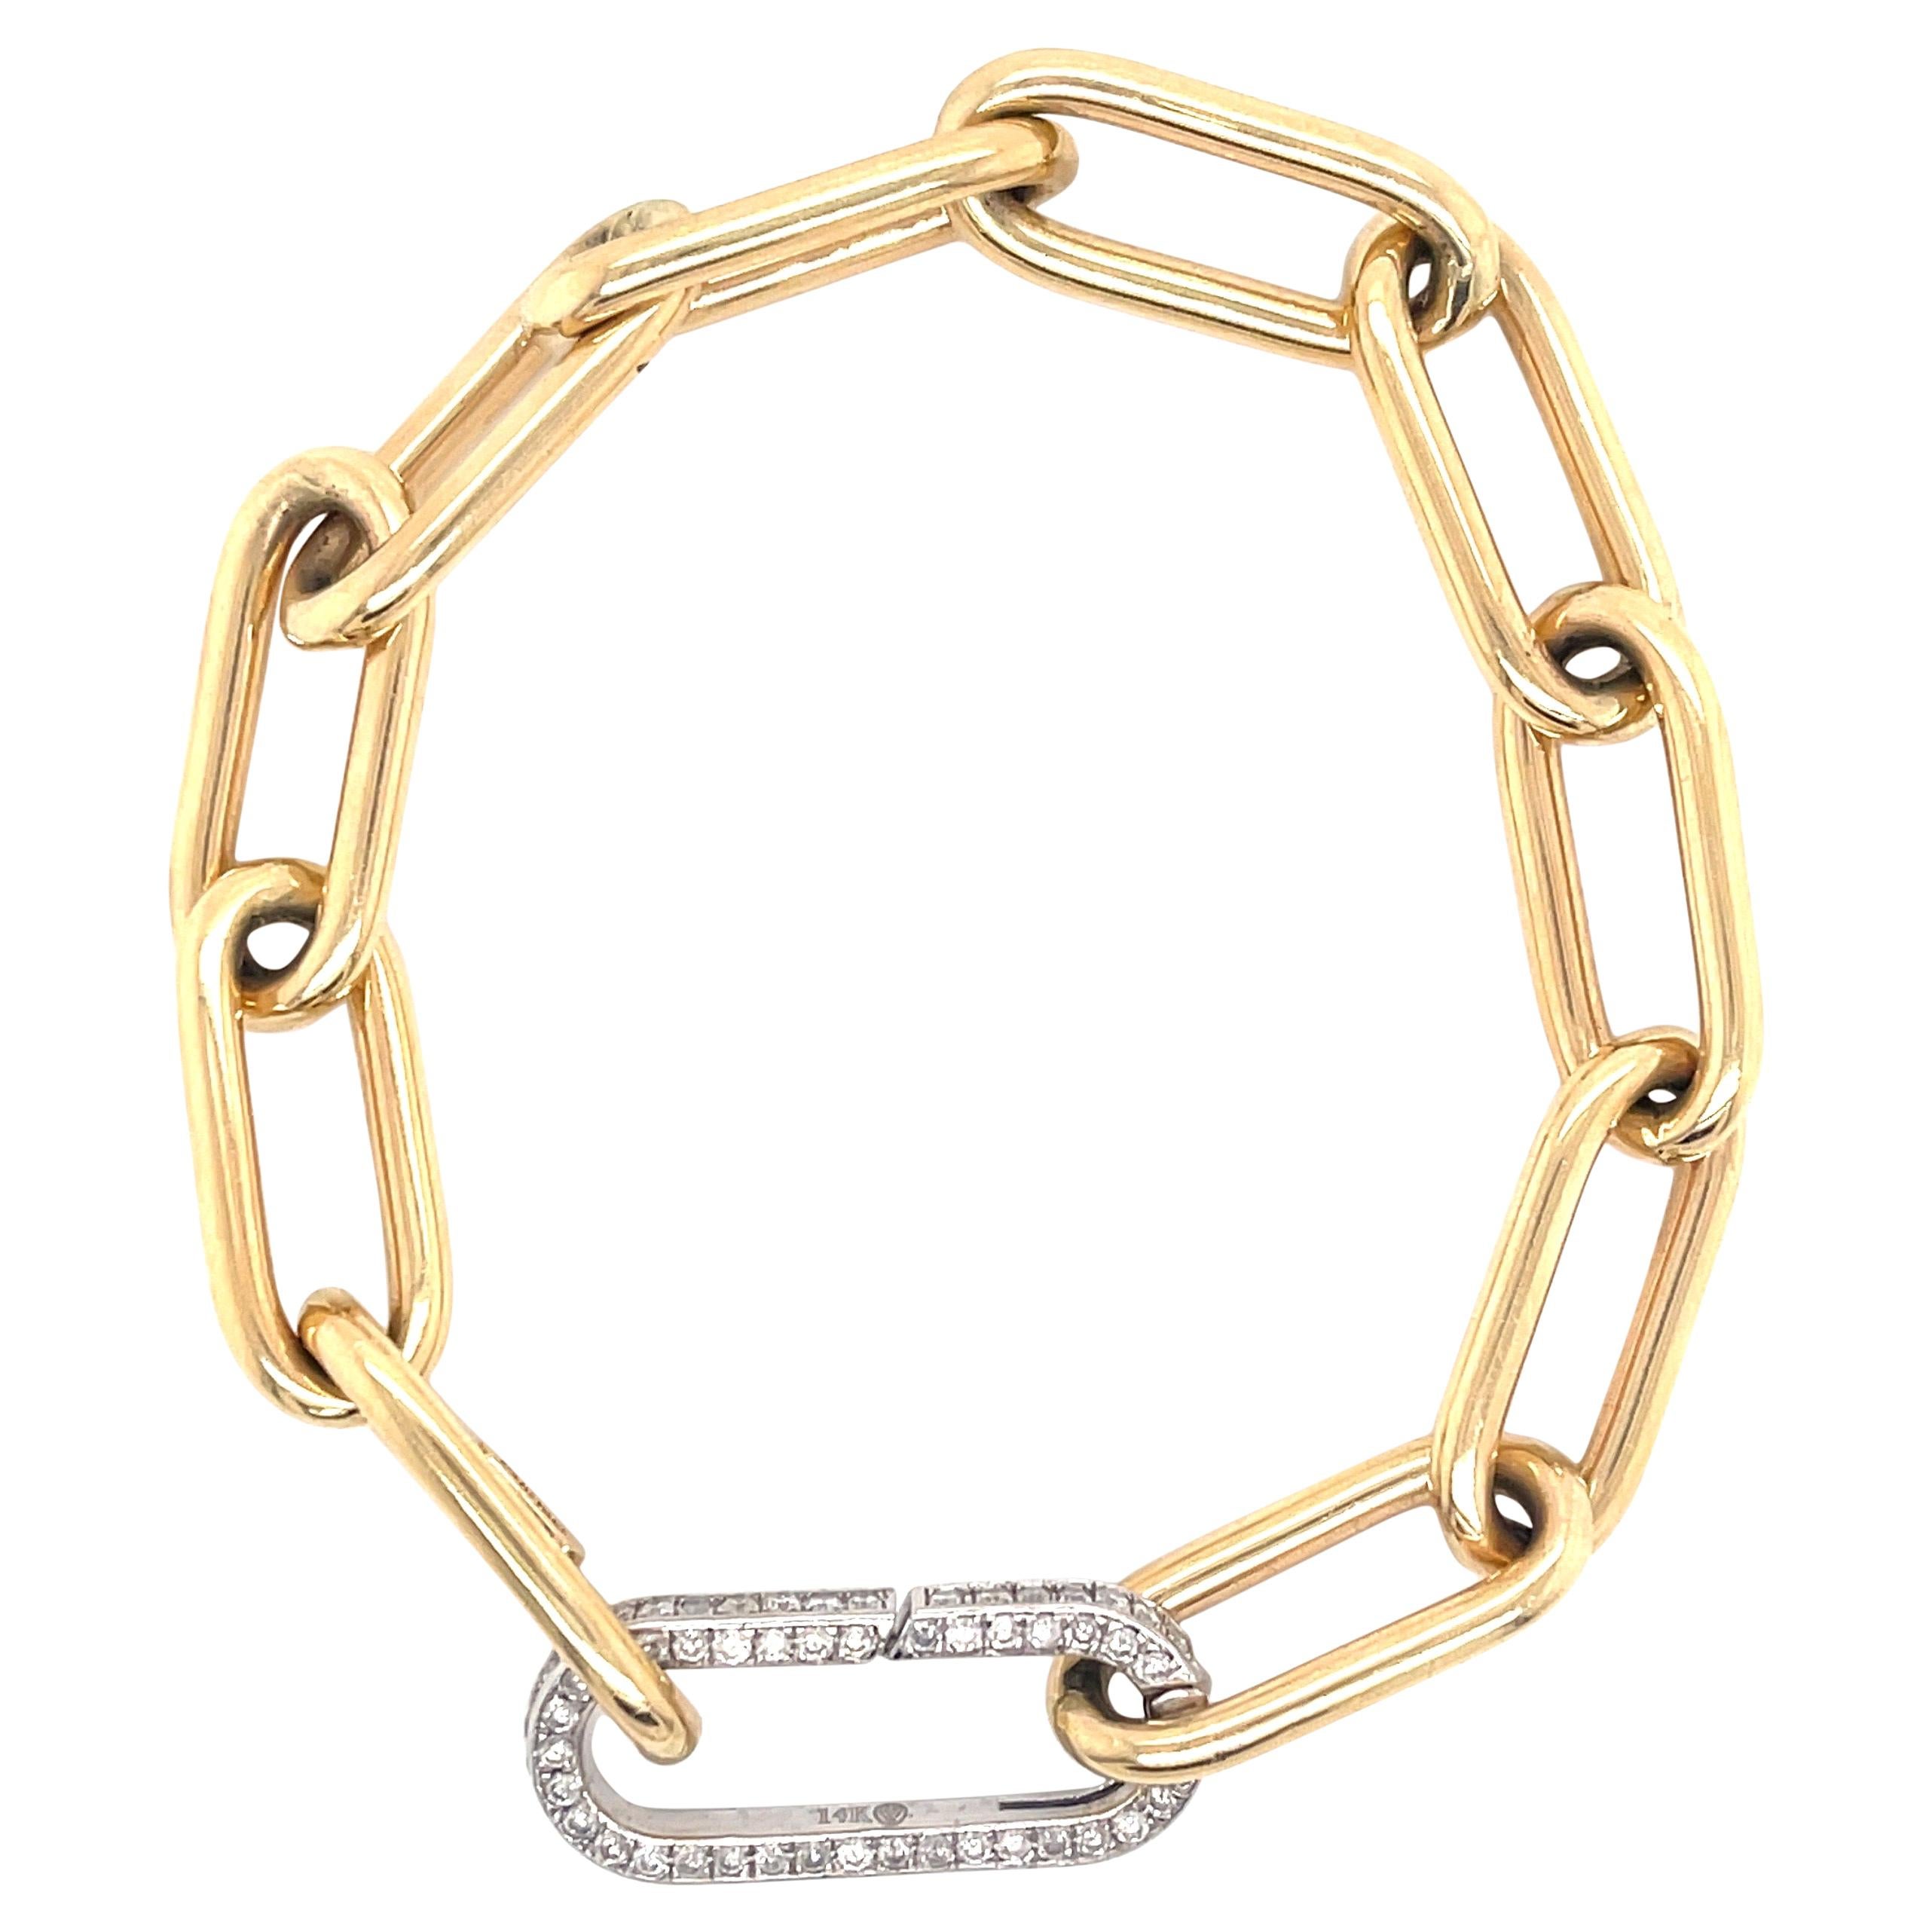 Italian 14 Karat Yellow Gold Link Chain Bracelet with White Gold Diamond Clasp